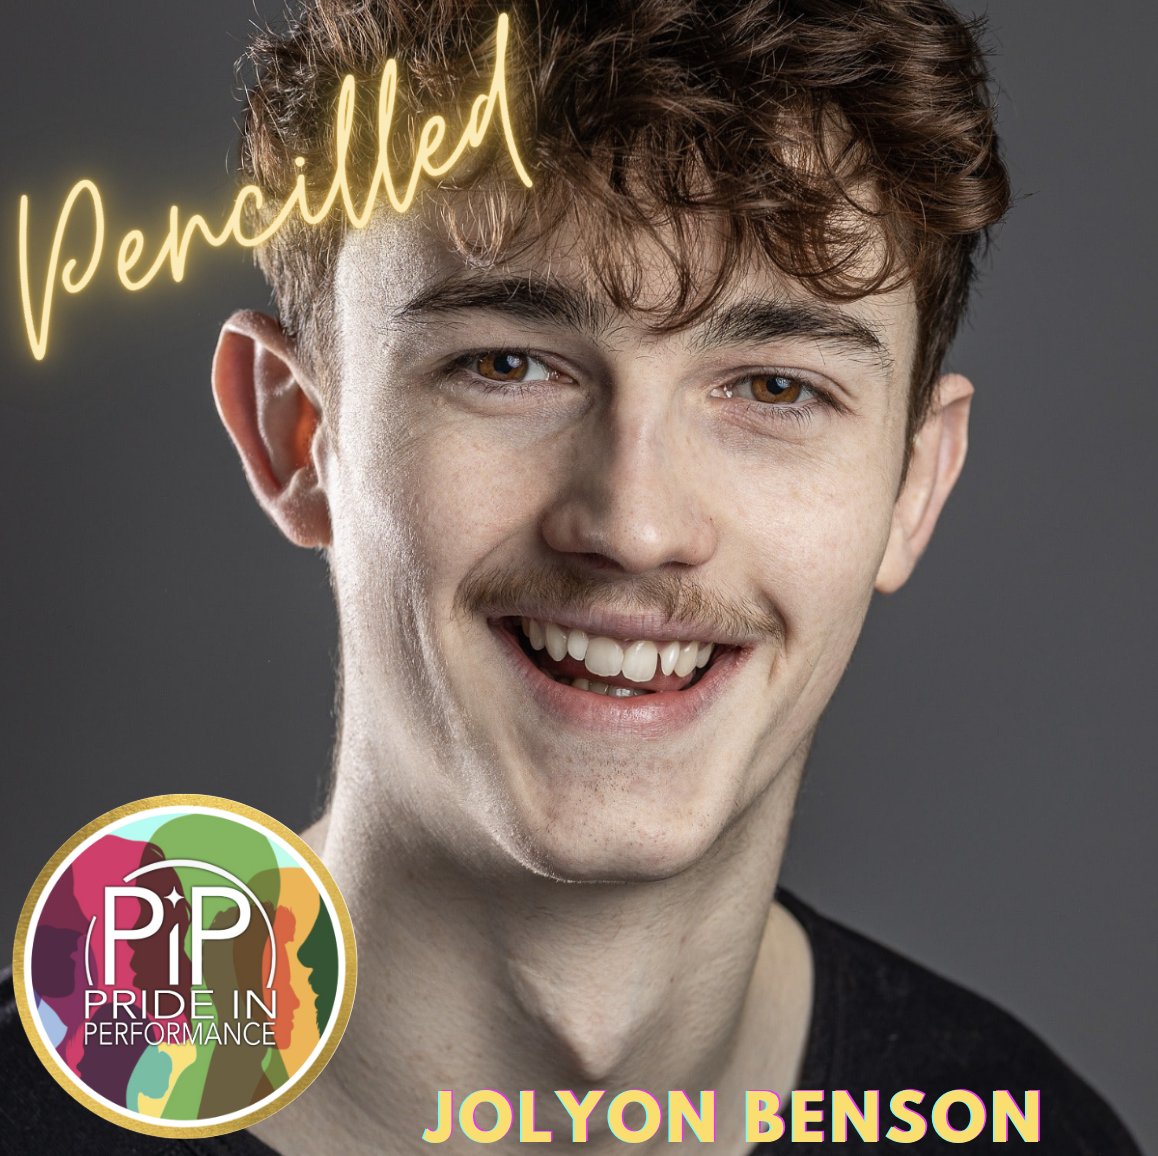 PiP PiP HOORAY! 🤞🥳 Congratulations JOLYON BENSON 🥳🤞 #Pencilled for a fabulous #Commercial app.spotlight.com/7051-6724-1551 #PositivelyPiP #Casting #ActorsLife